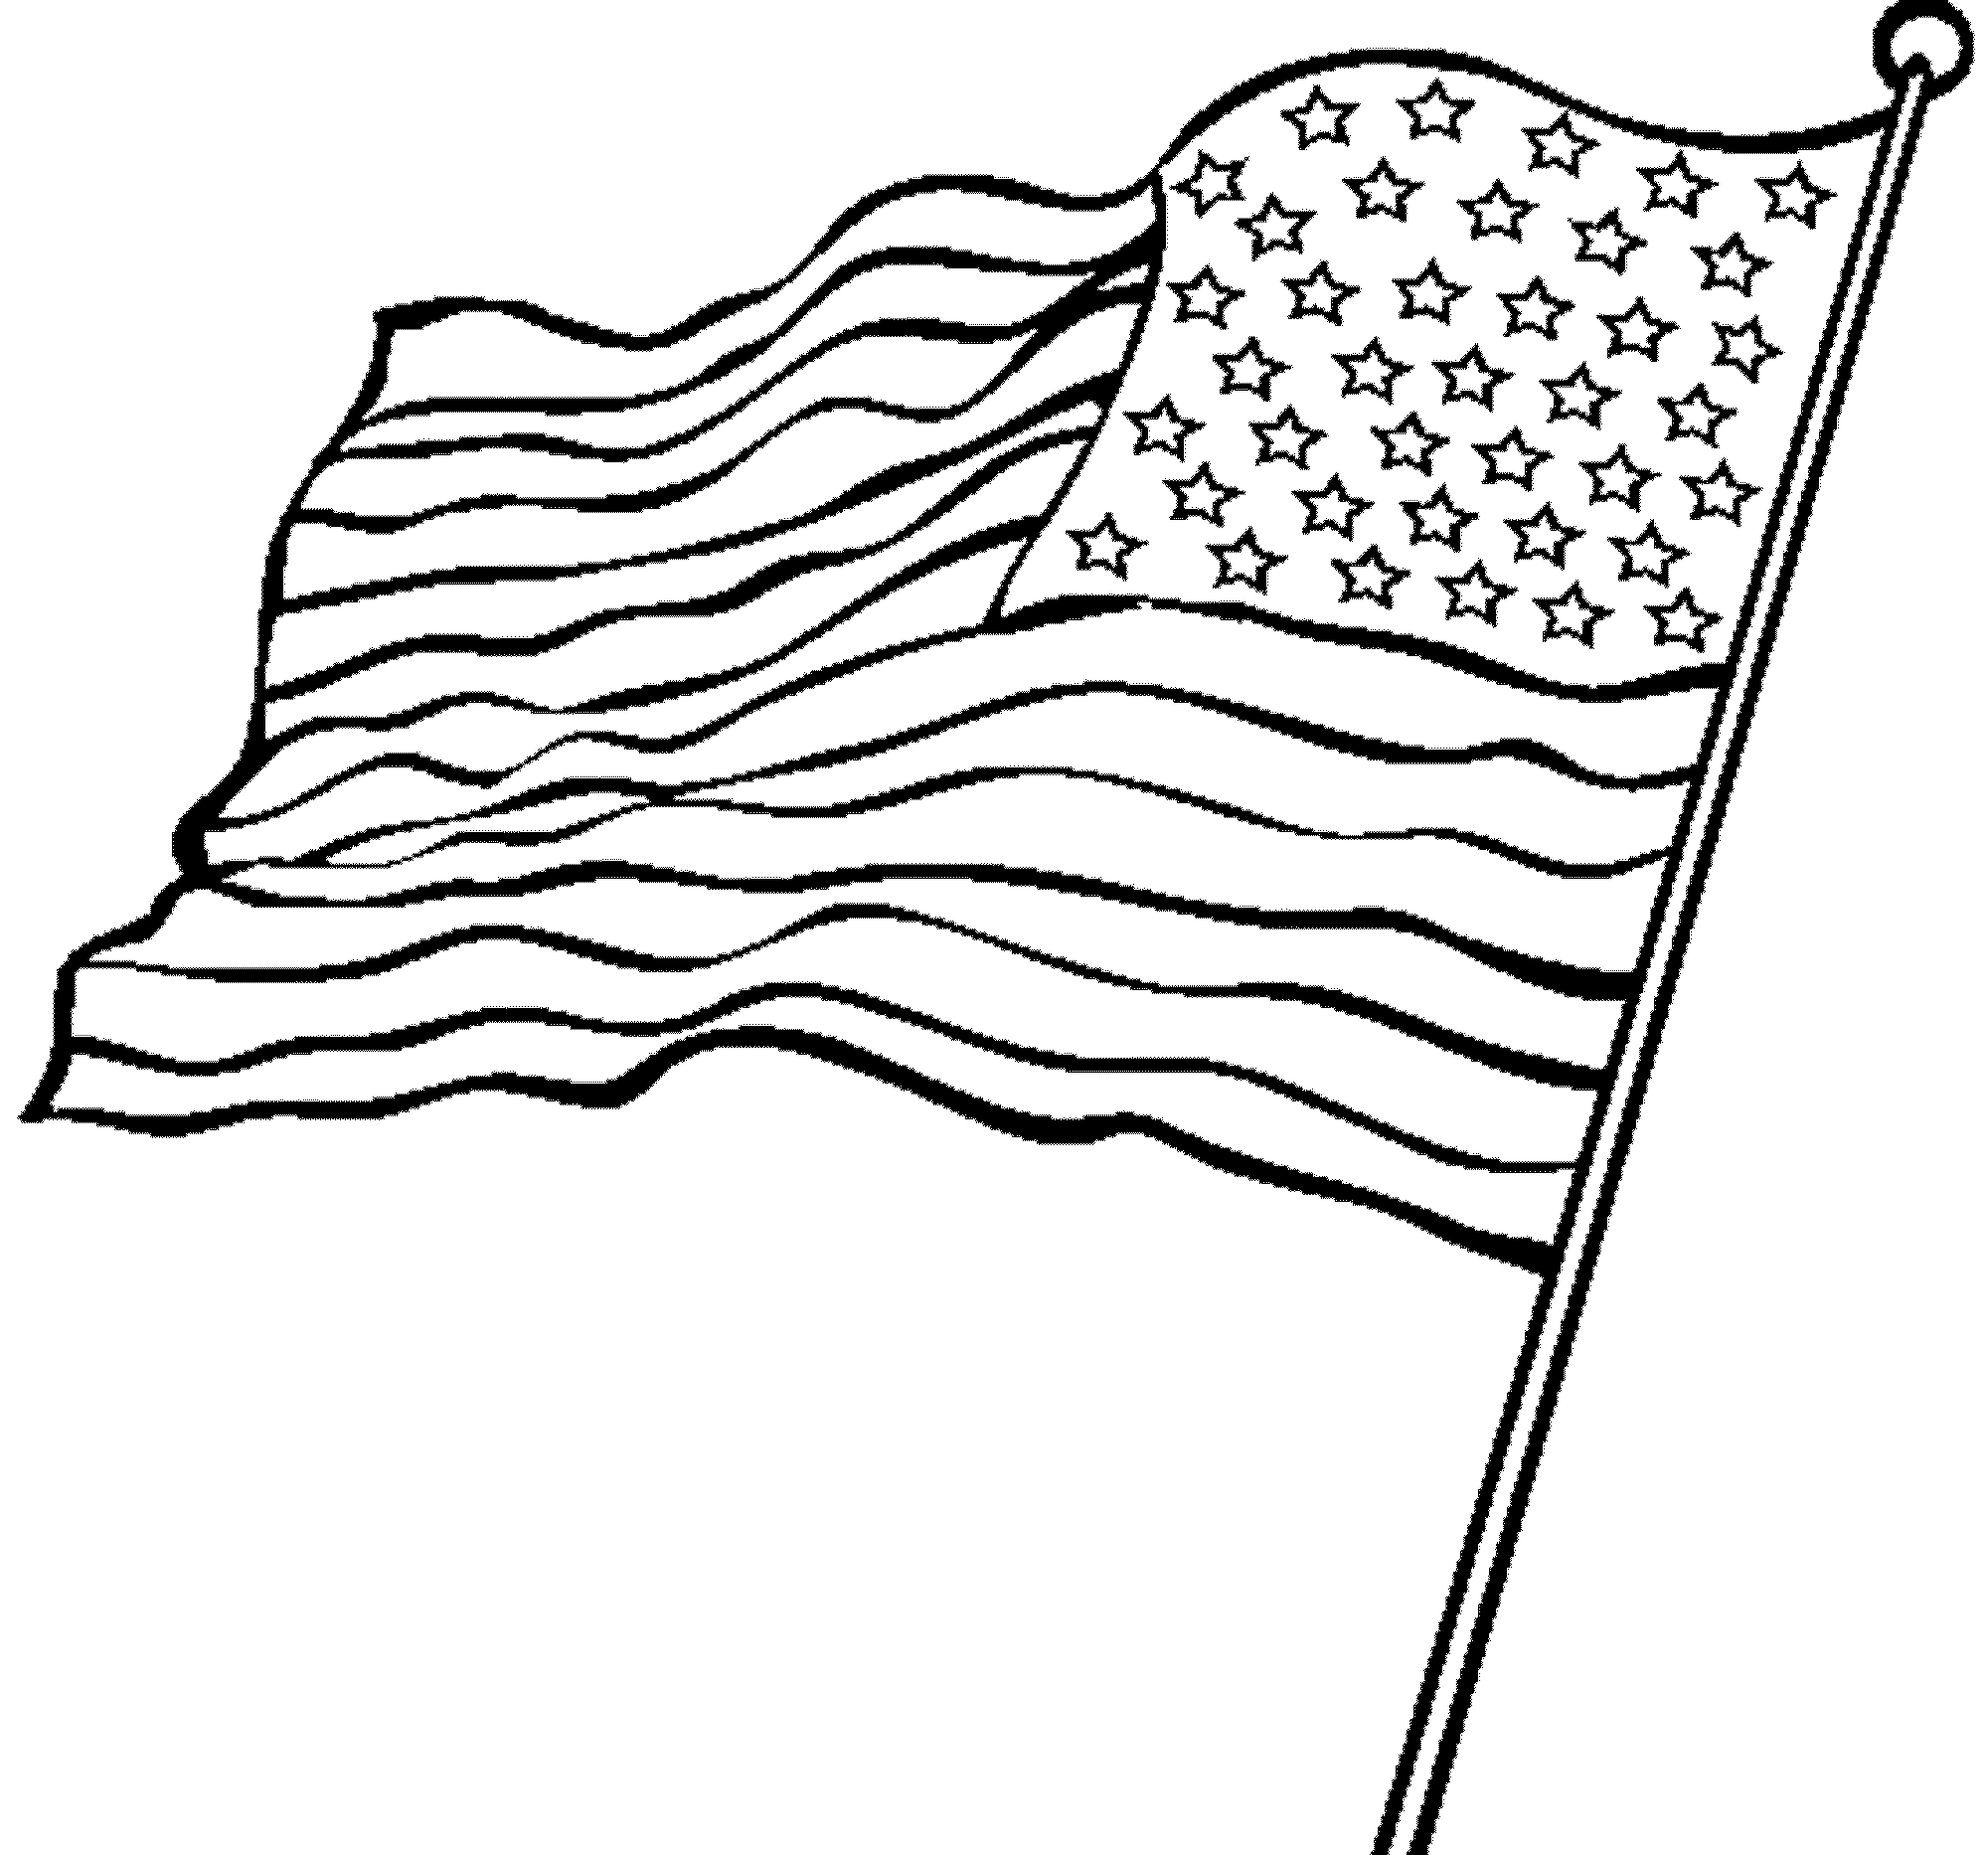 Waving American Flag Drawing - Cliparts.co